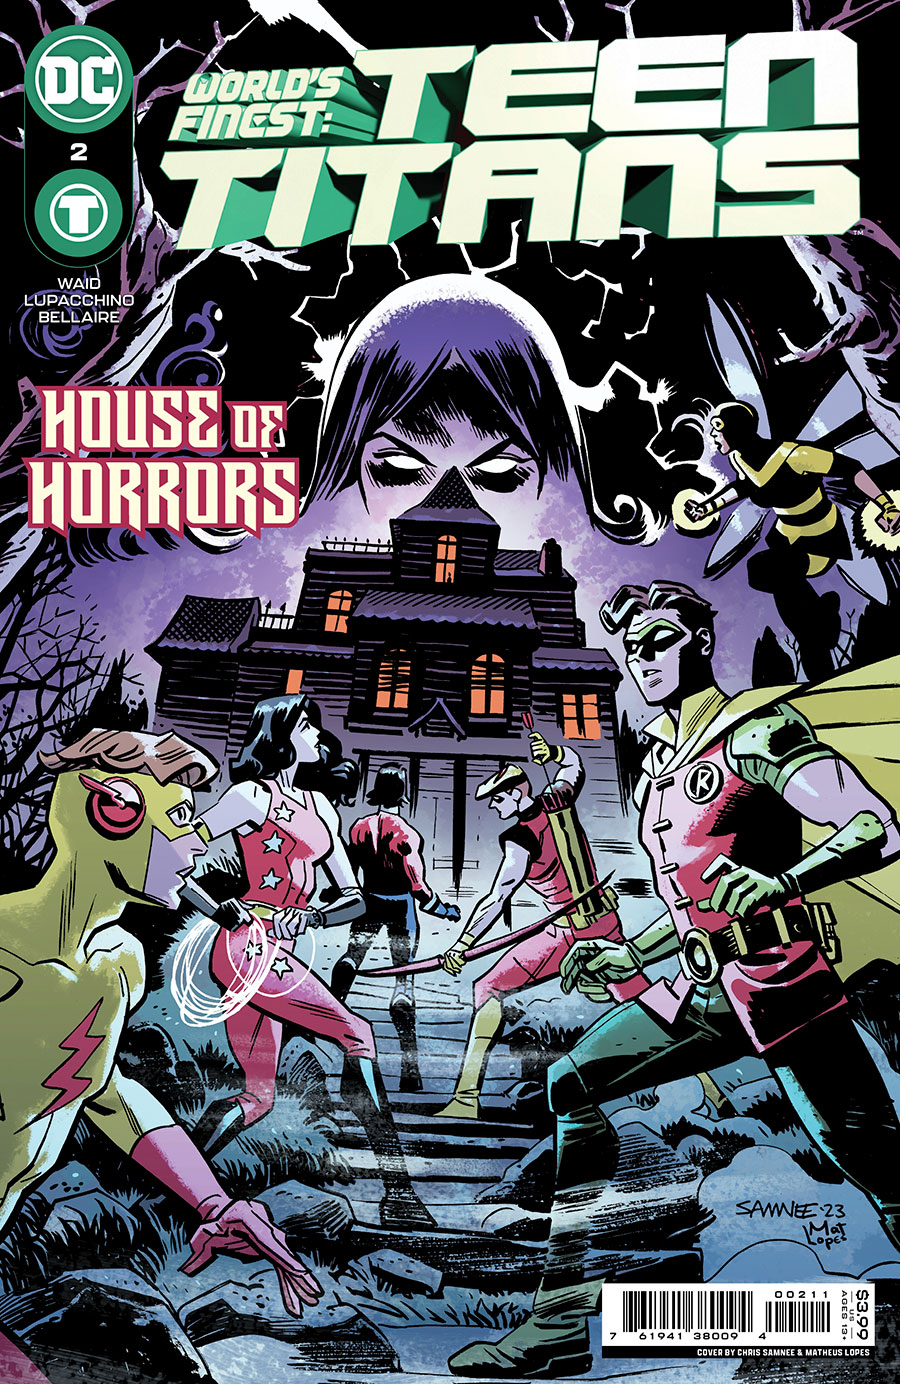 Worlds Finest Teen Titans #2 Cover A Regular Chris Samnee Cover